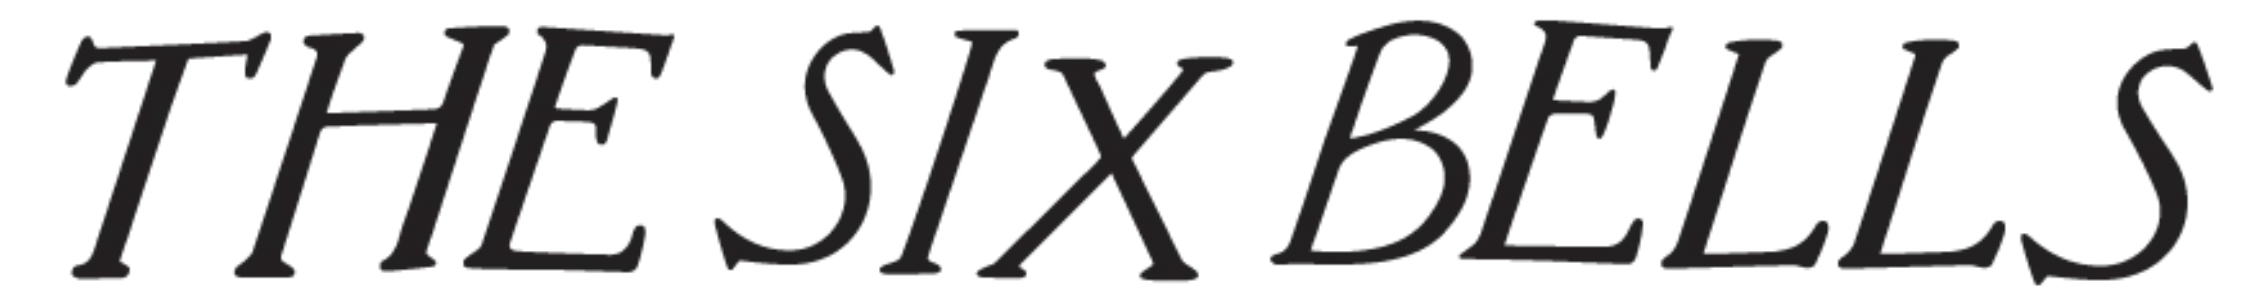 The Six Bells_logo